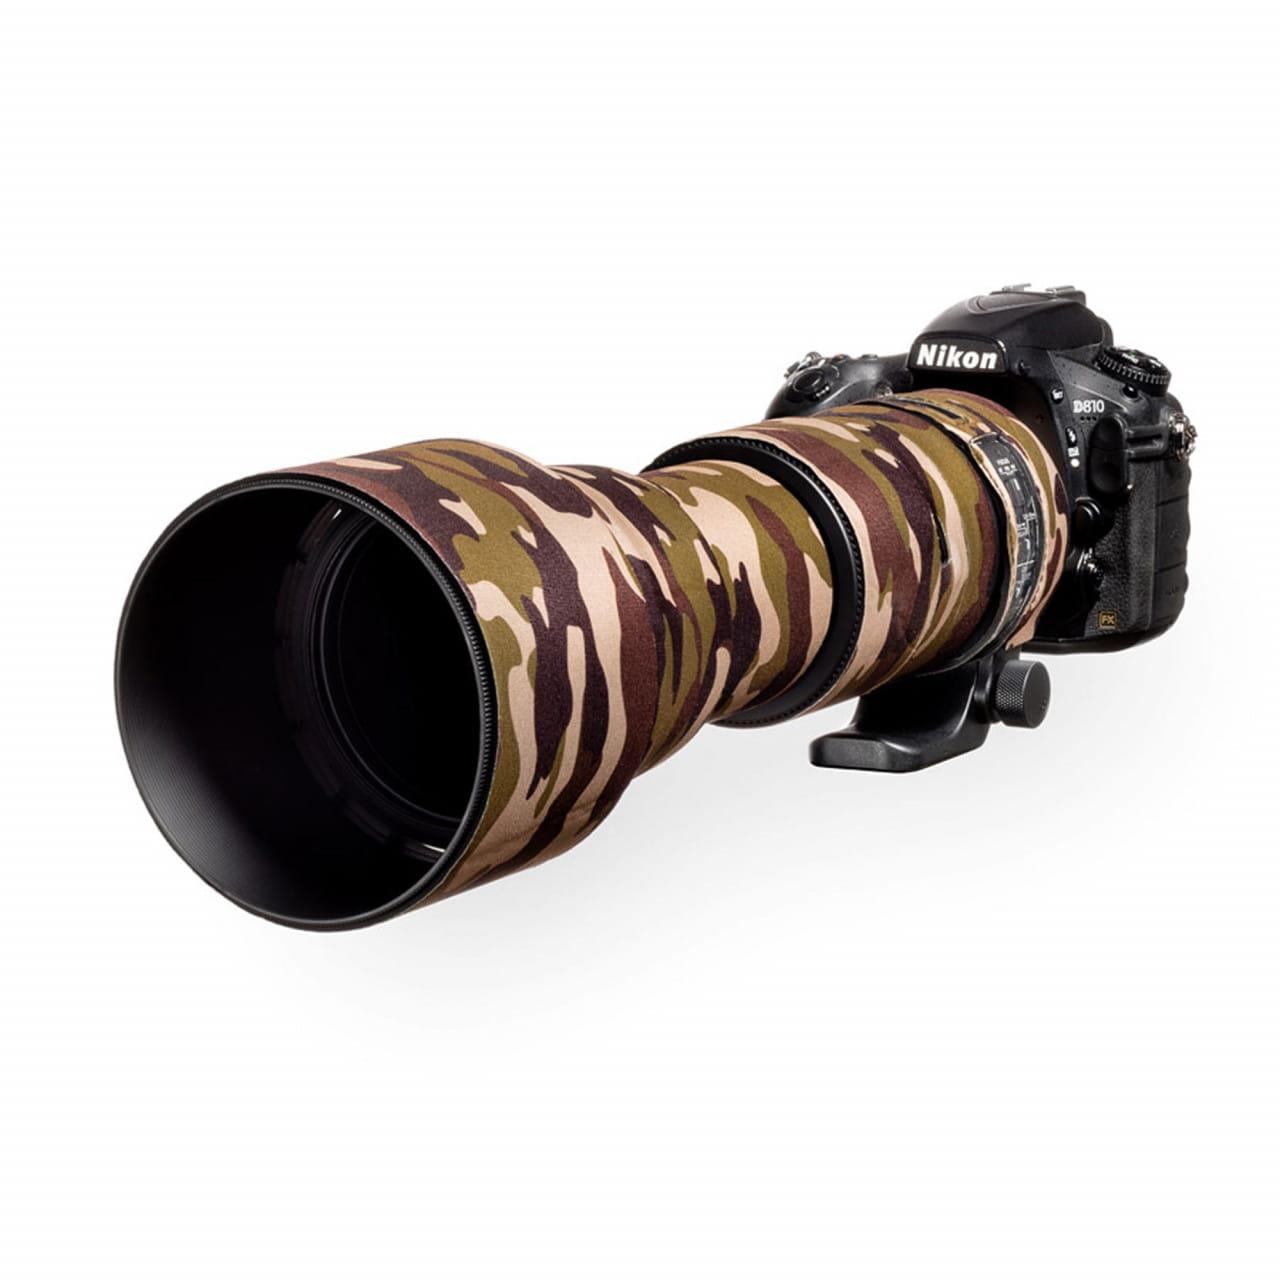 EASYCOVER Lens Oak Objektivschutz für Sigma 150-600mm f/5-6.3 DG OS HSM Contemporary Braun Camouflag